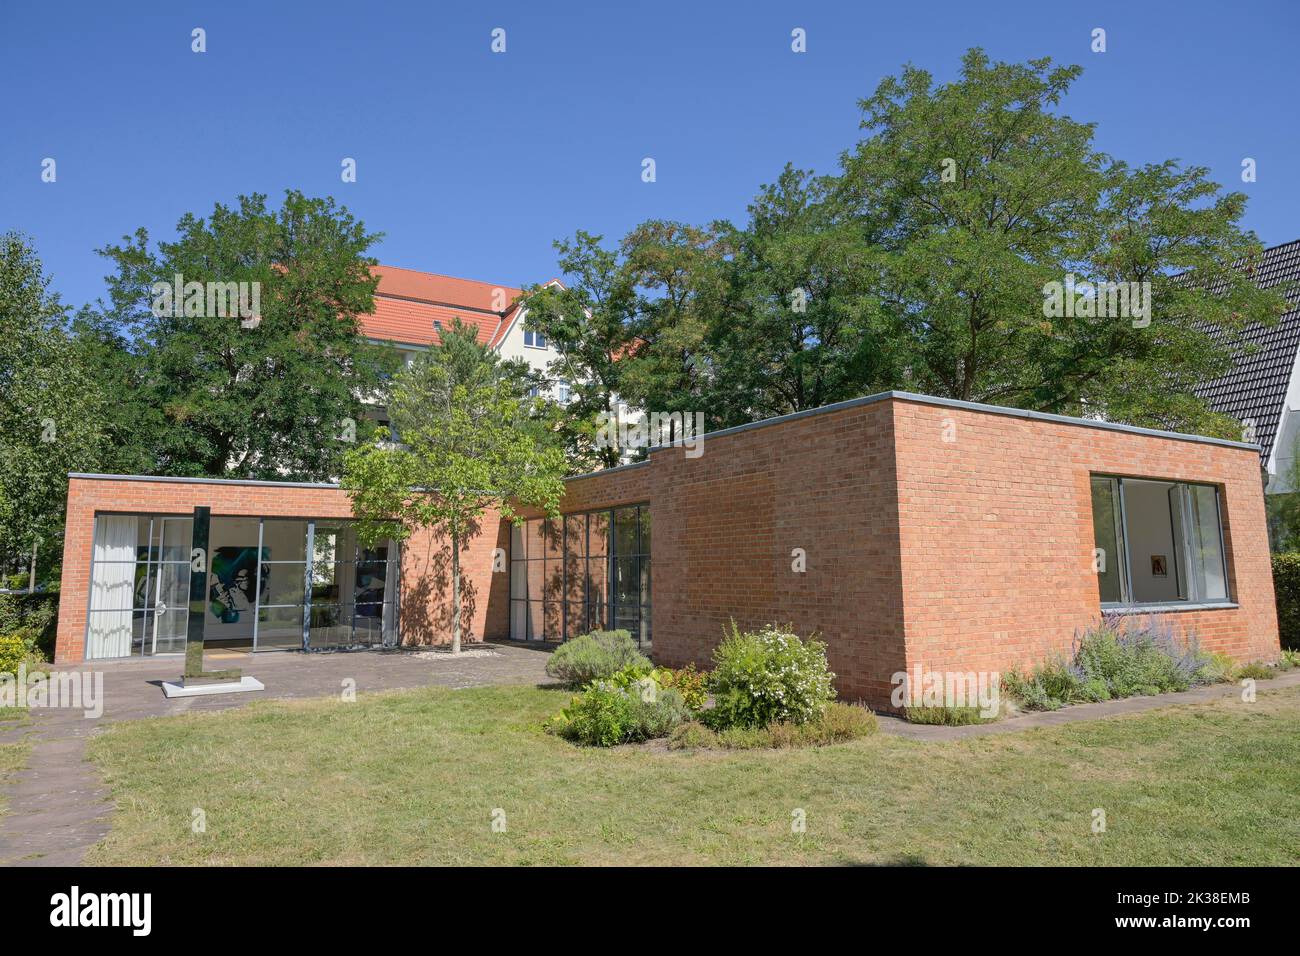 Mies van der Rohe Haus, Haus Lemke, Oberseestraße, Alt-Hohenschönhausen, Lichtenberg, Berlín, Alemania Foto de stock